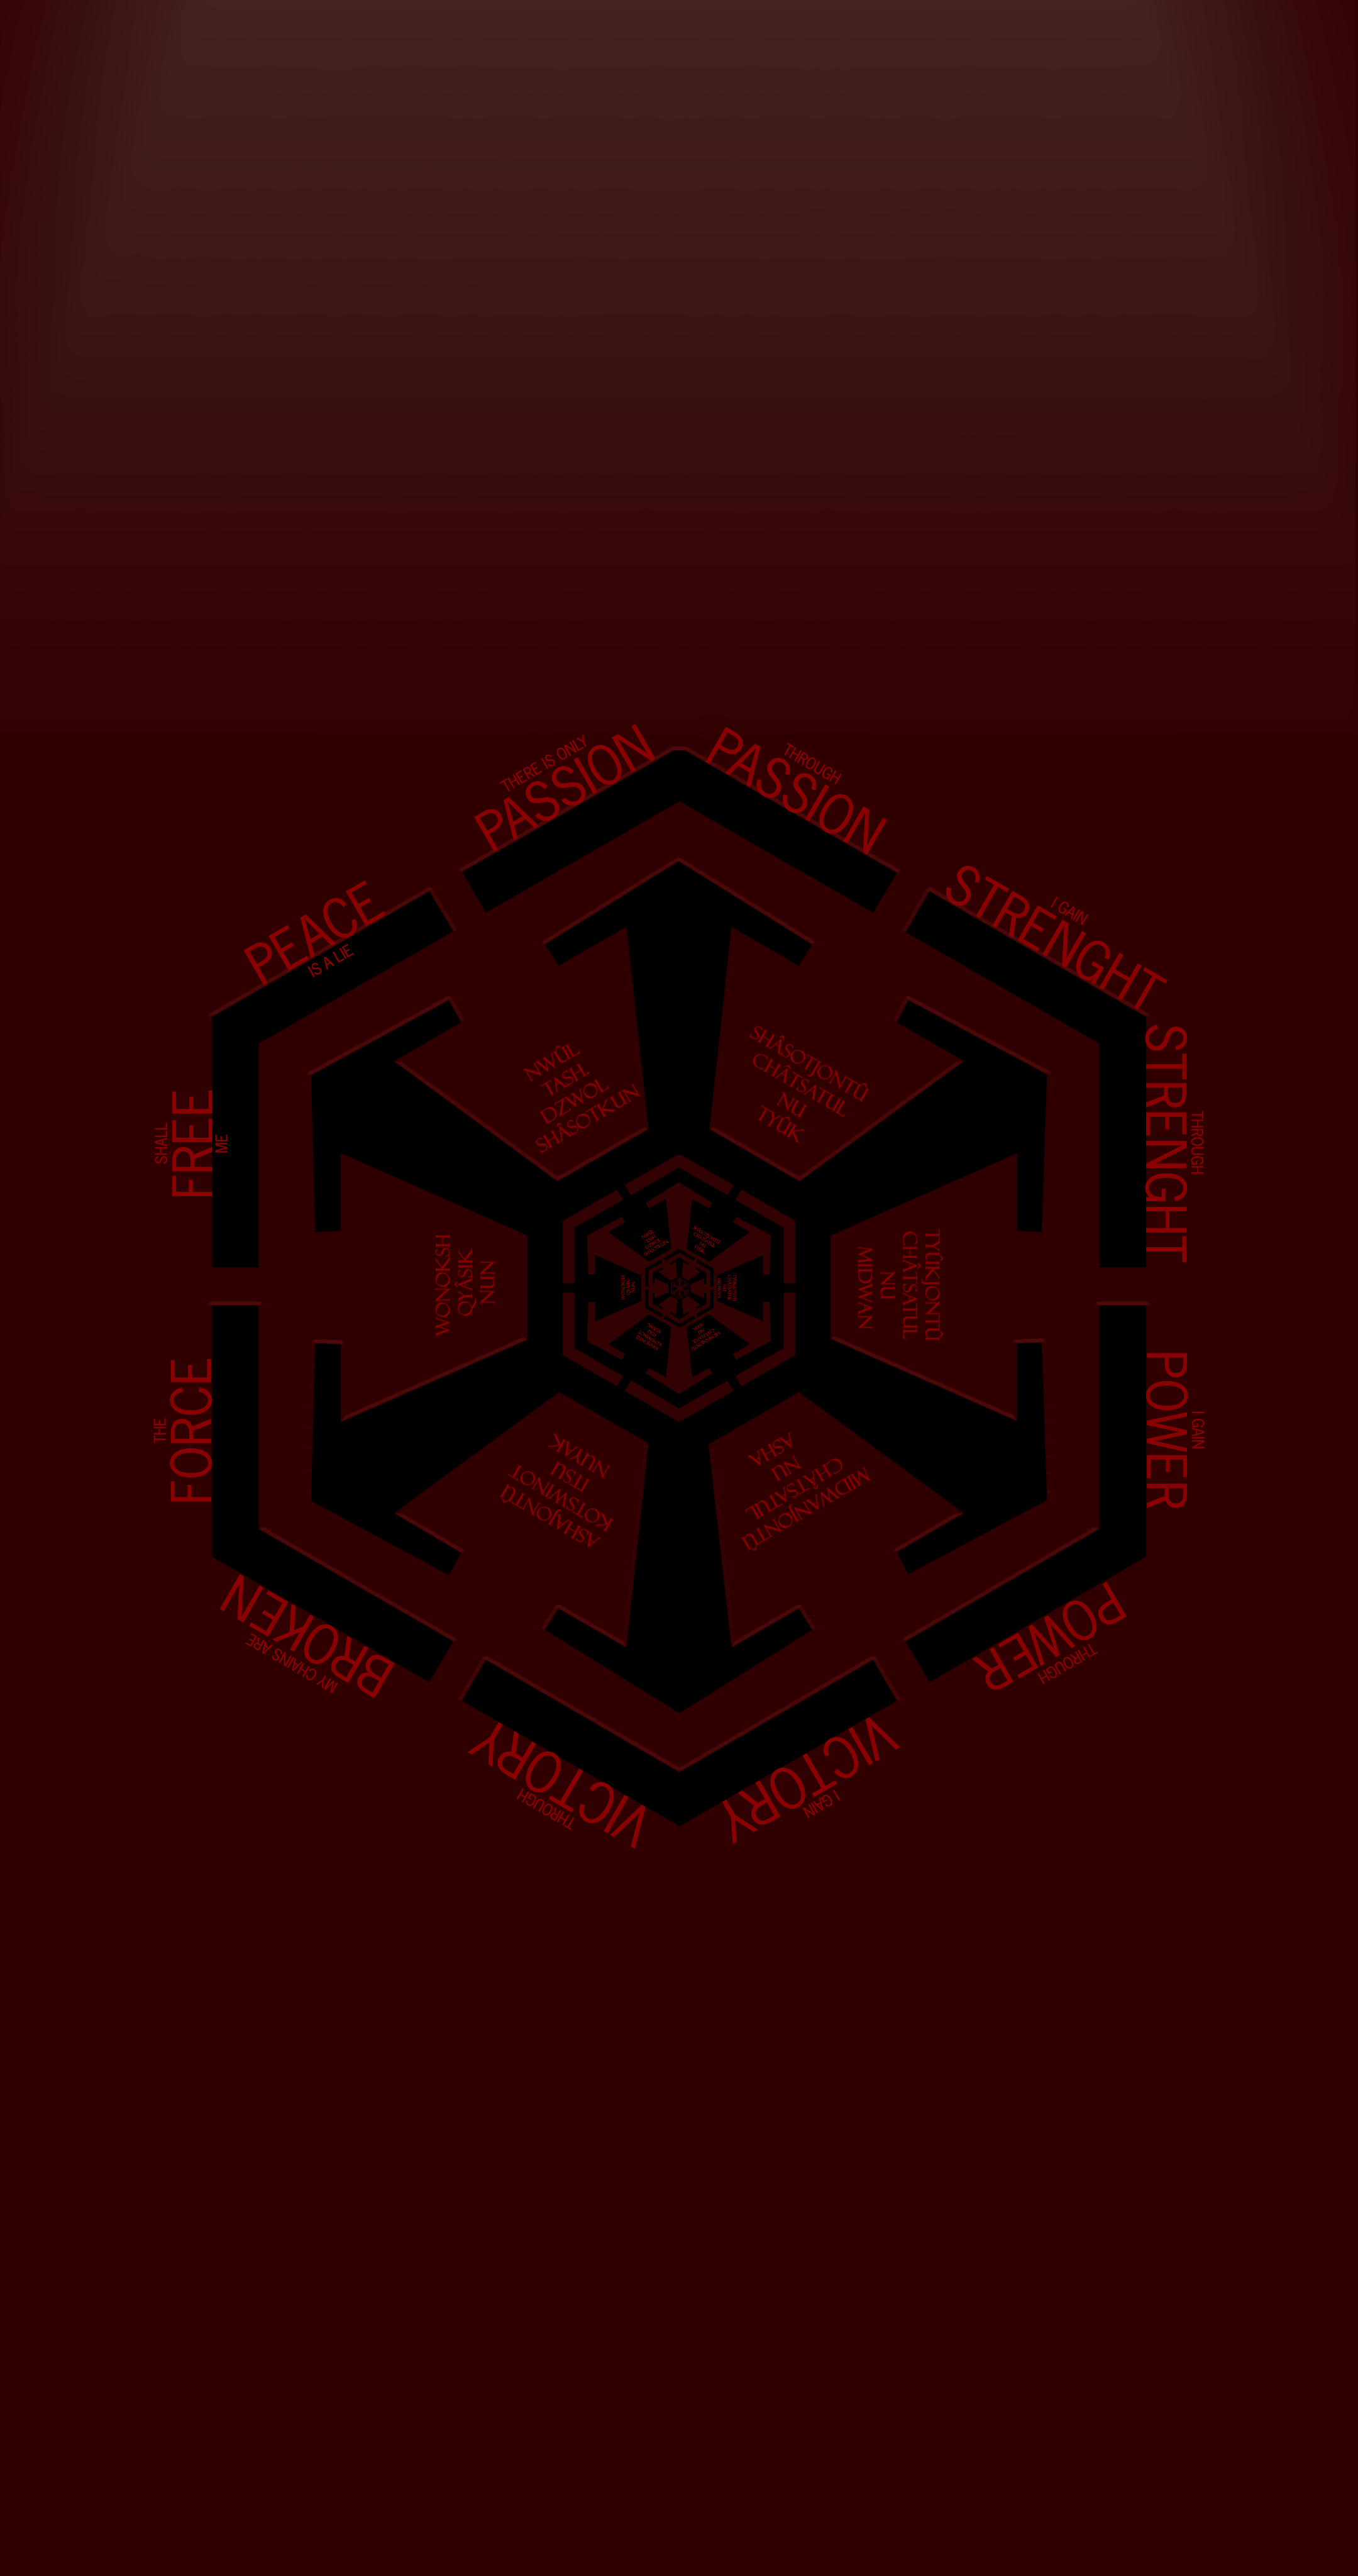 Sith Empire Wallpaper Free Sith Empire Background